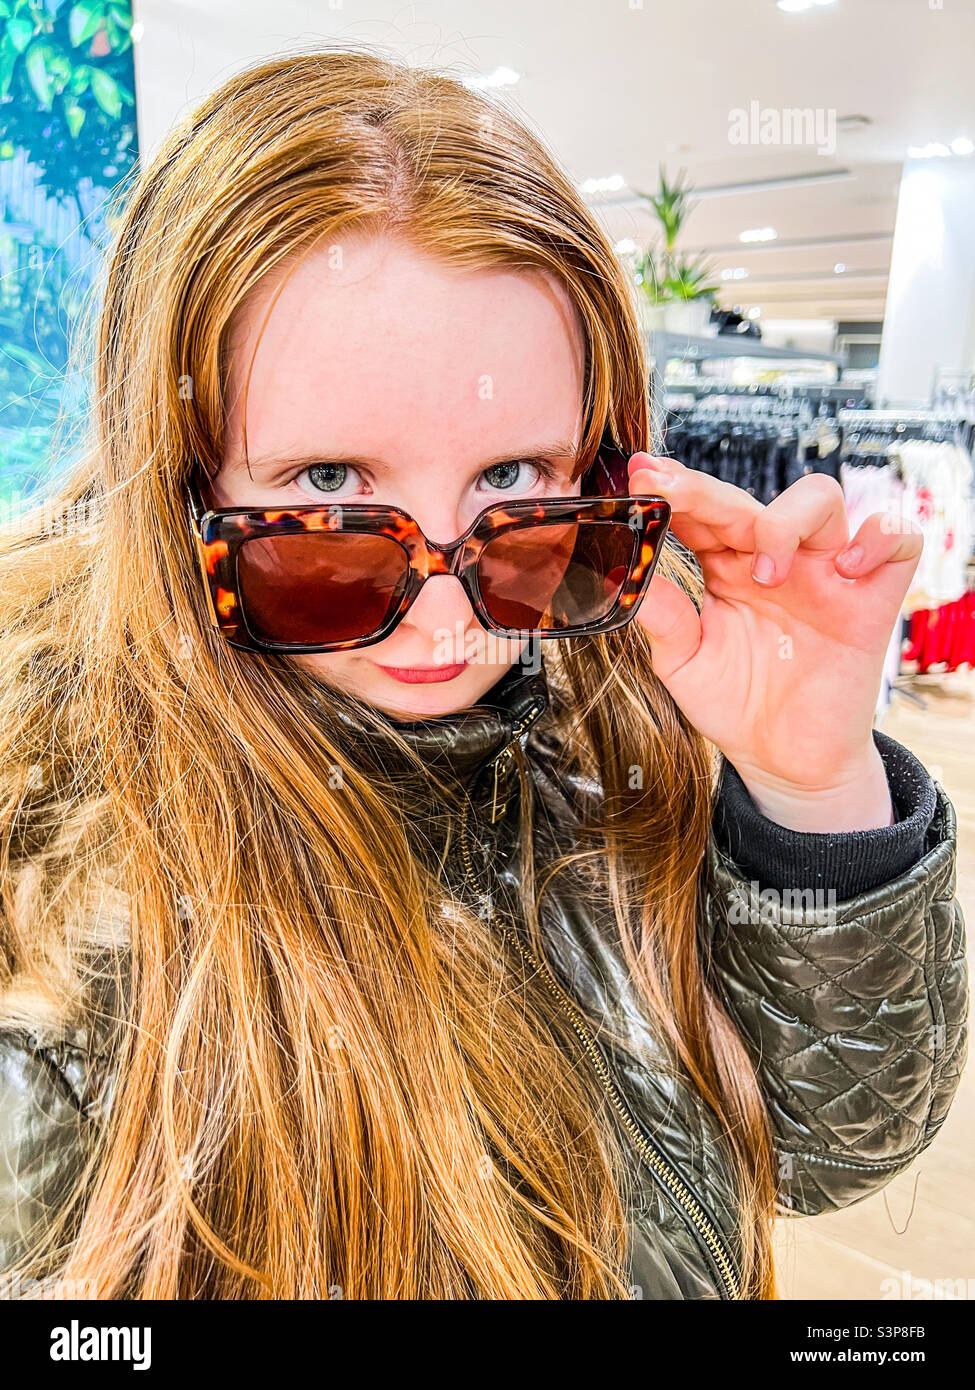 Young girl wearing sunglasses posing Stock Photo